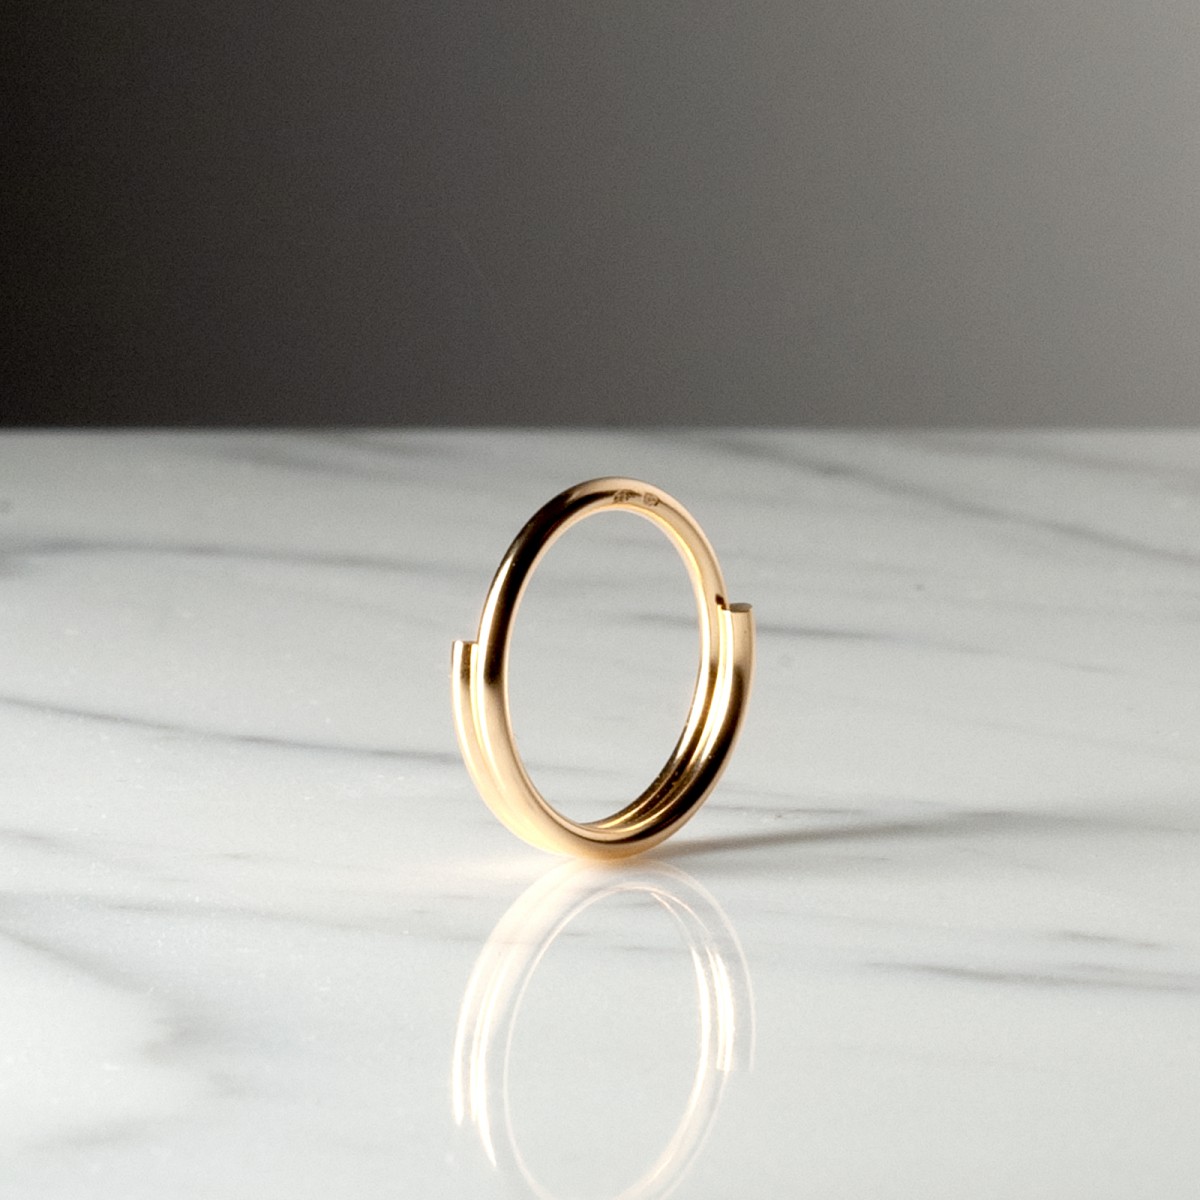 GEO ROUND 2MM 2055 - Wedding ring handmade in France